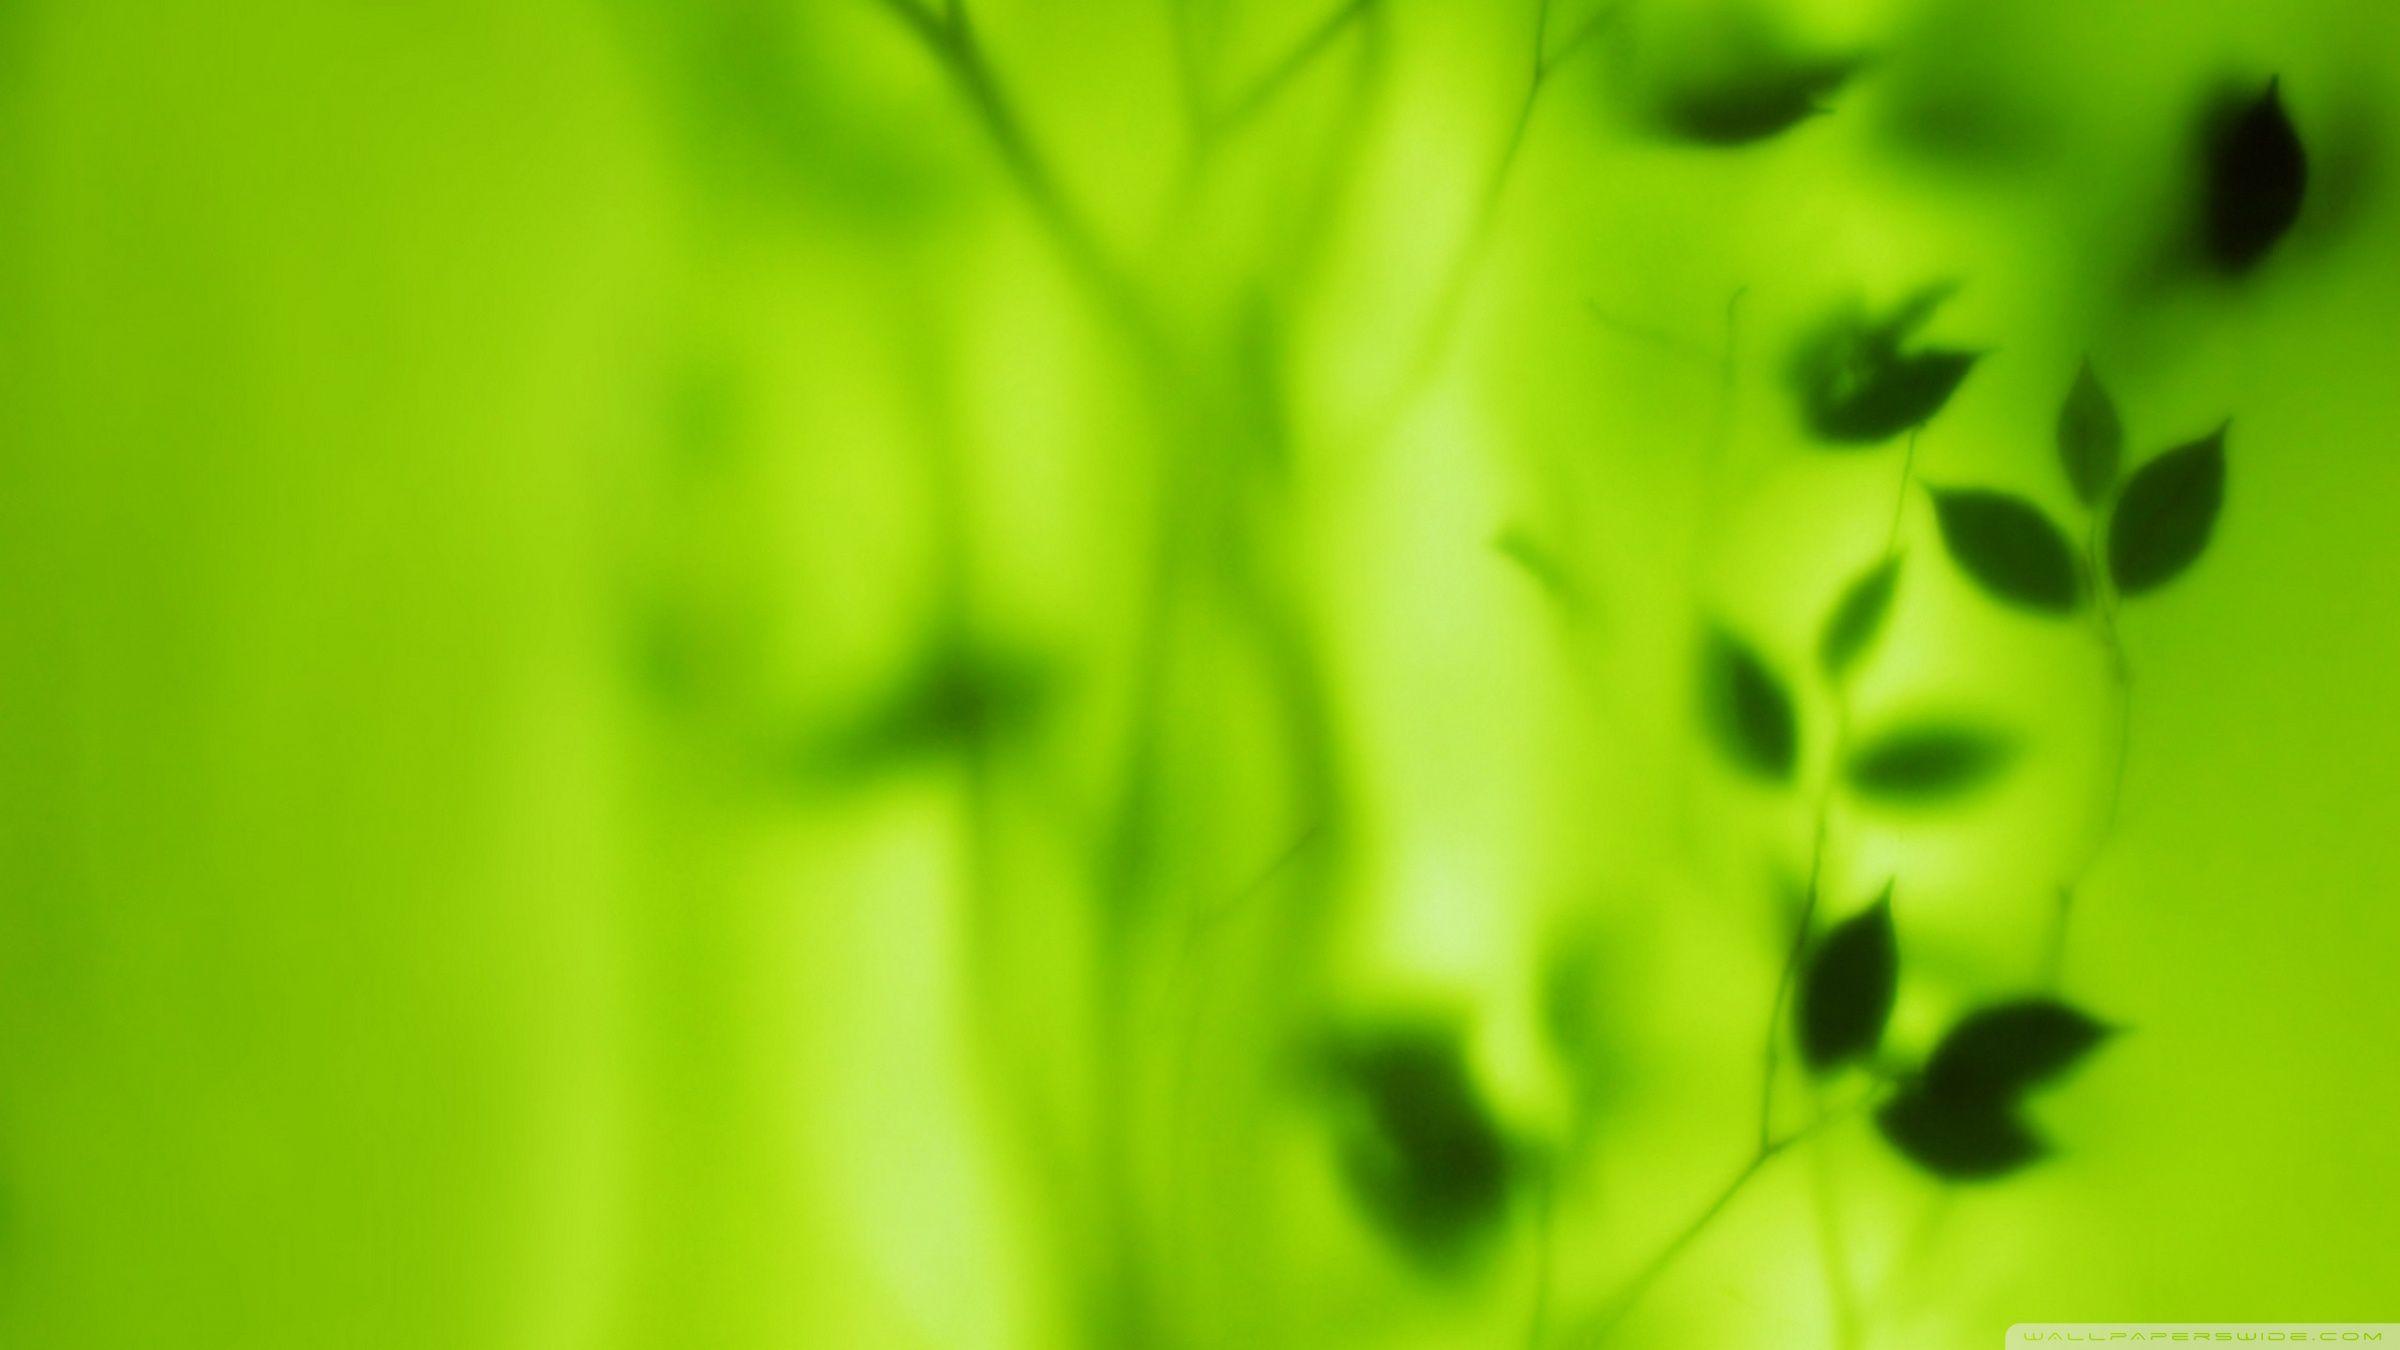 Blurred Green Leaves HD desktop wallpaper, High Definition